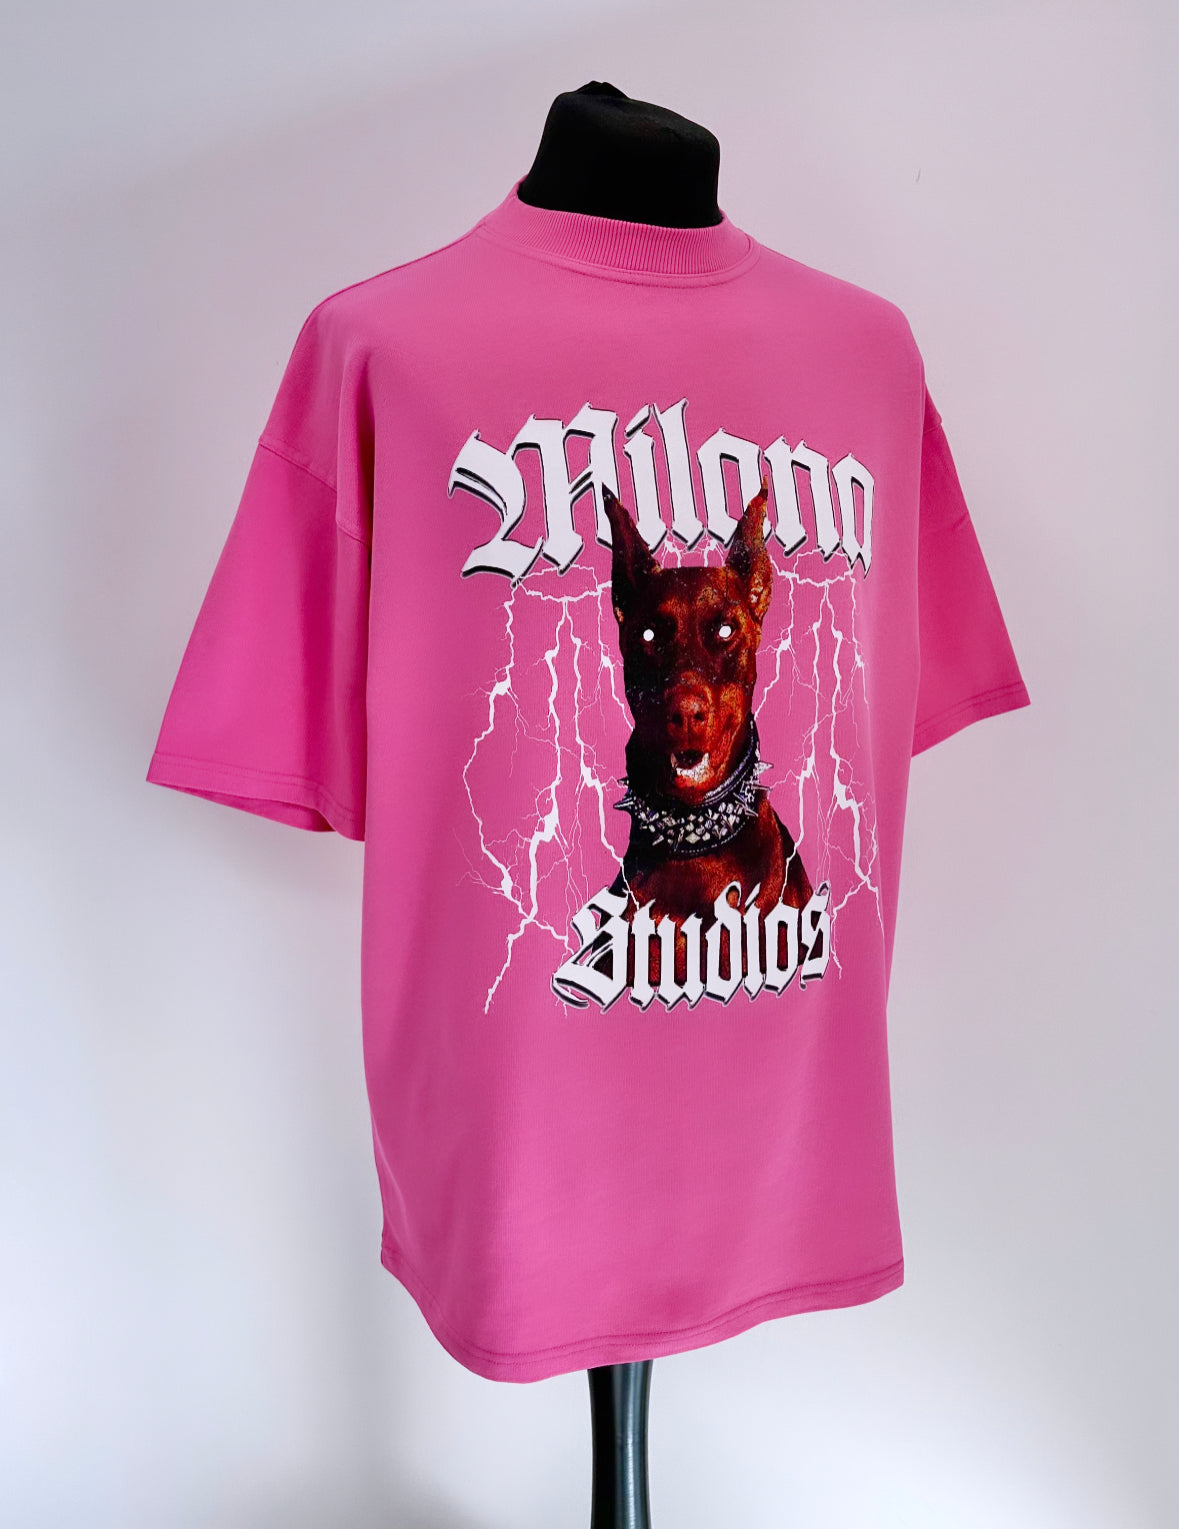 Hot Pink Heavyweight Graphic T-shirt.